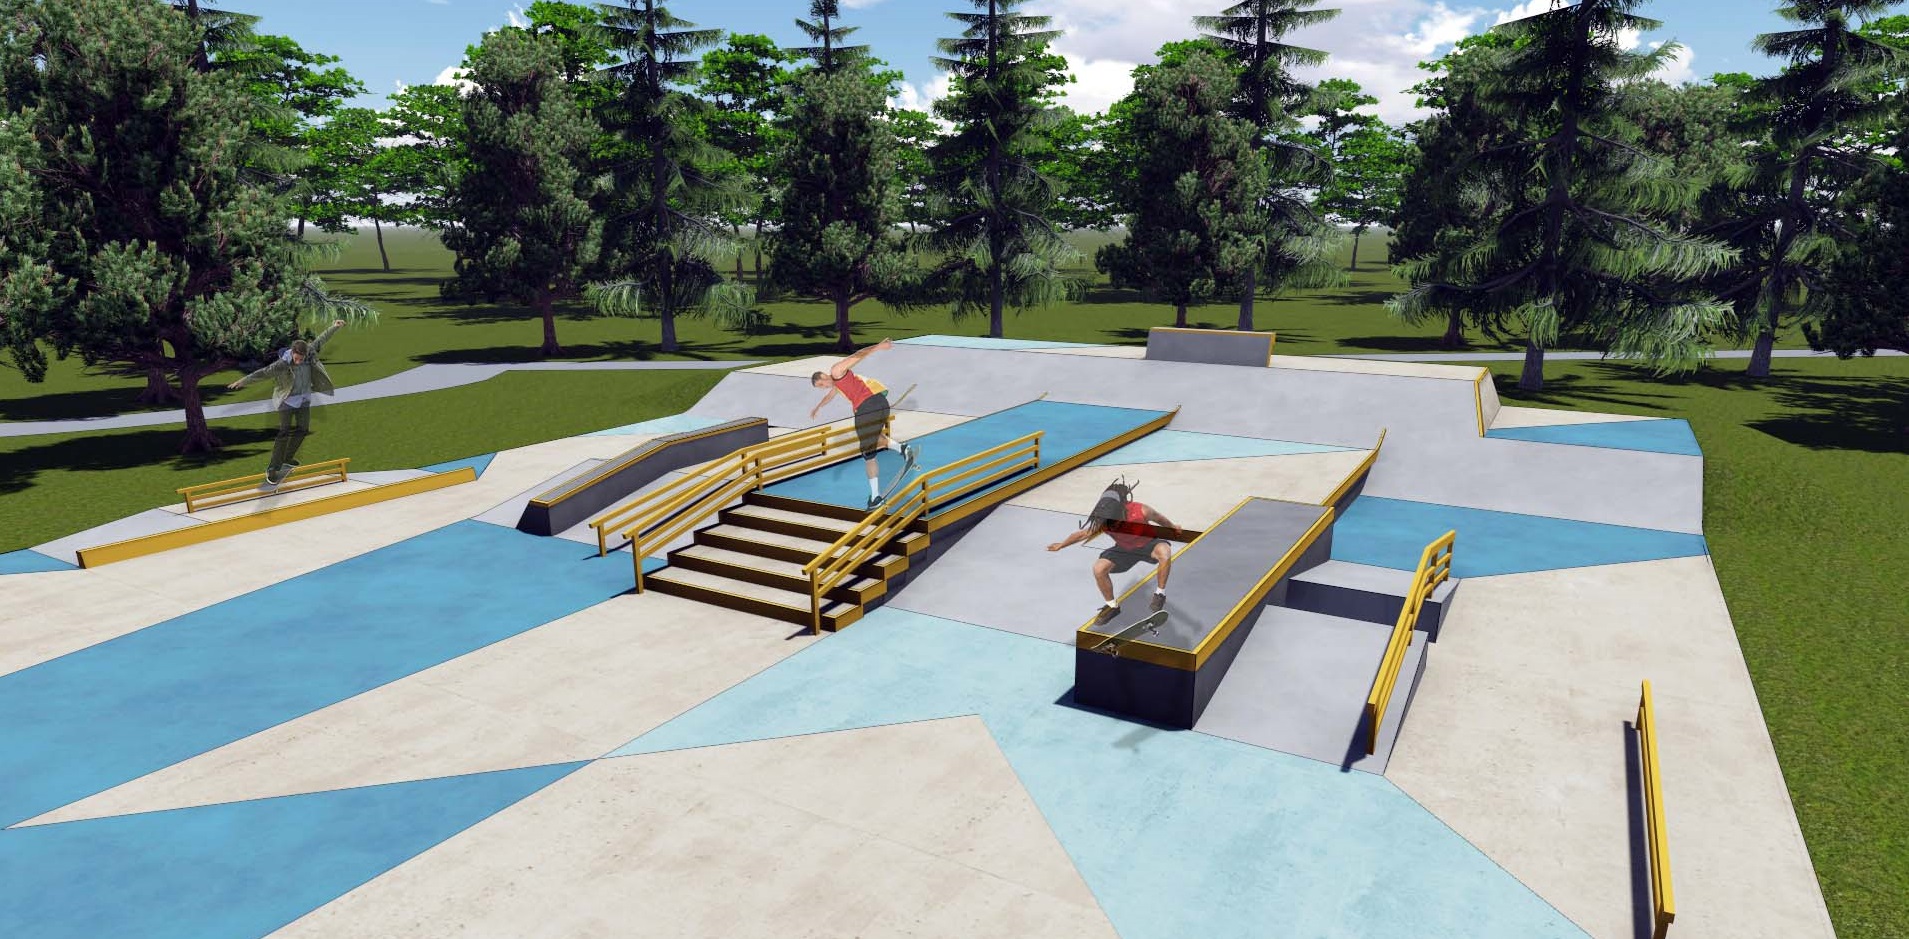 Bundanoon Skate Park concept design